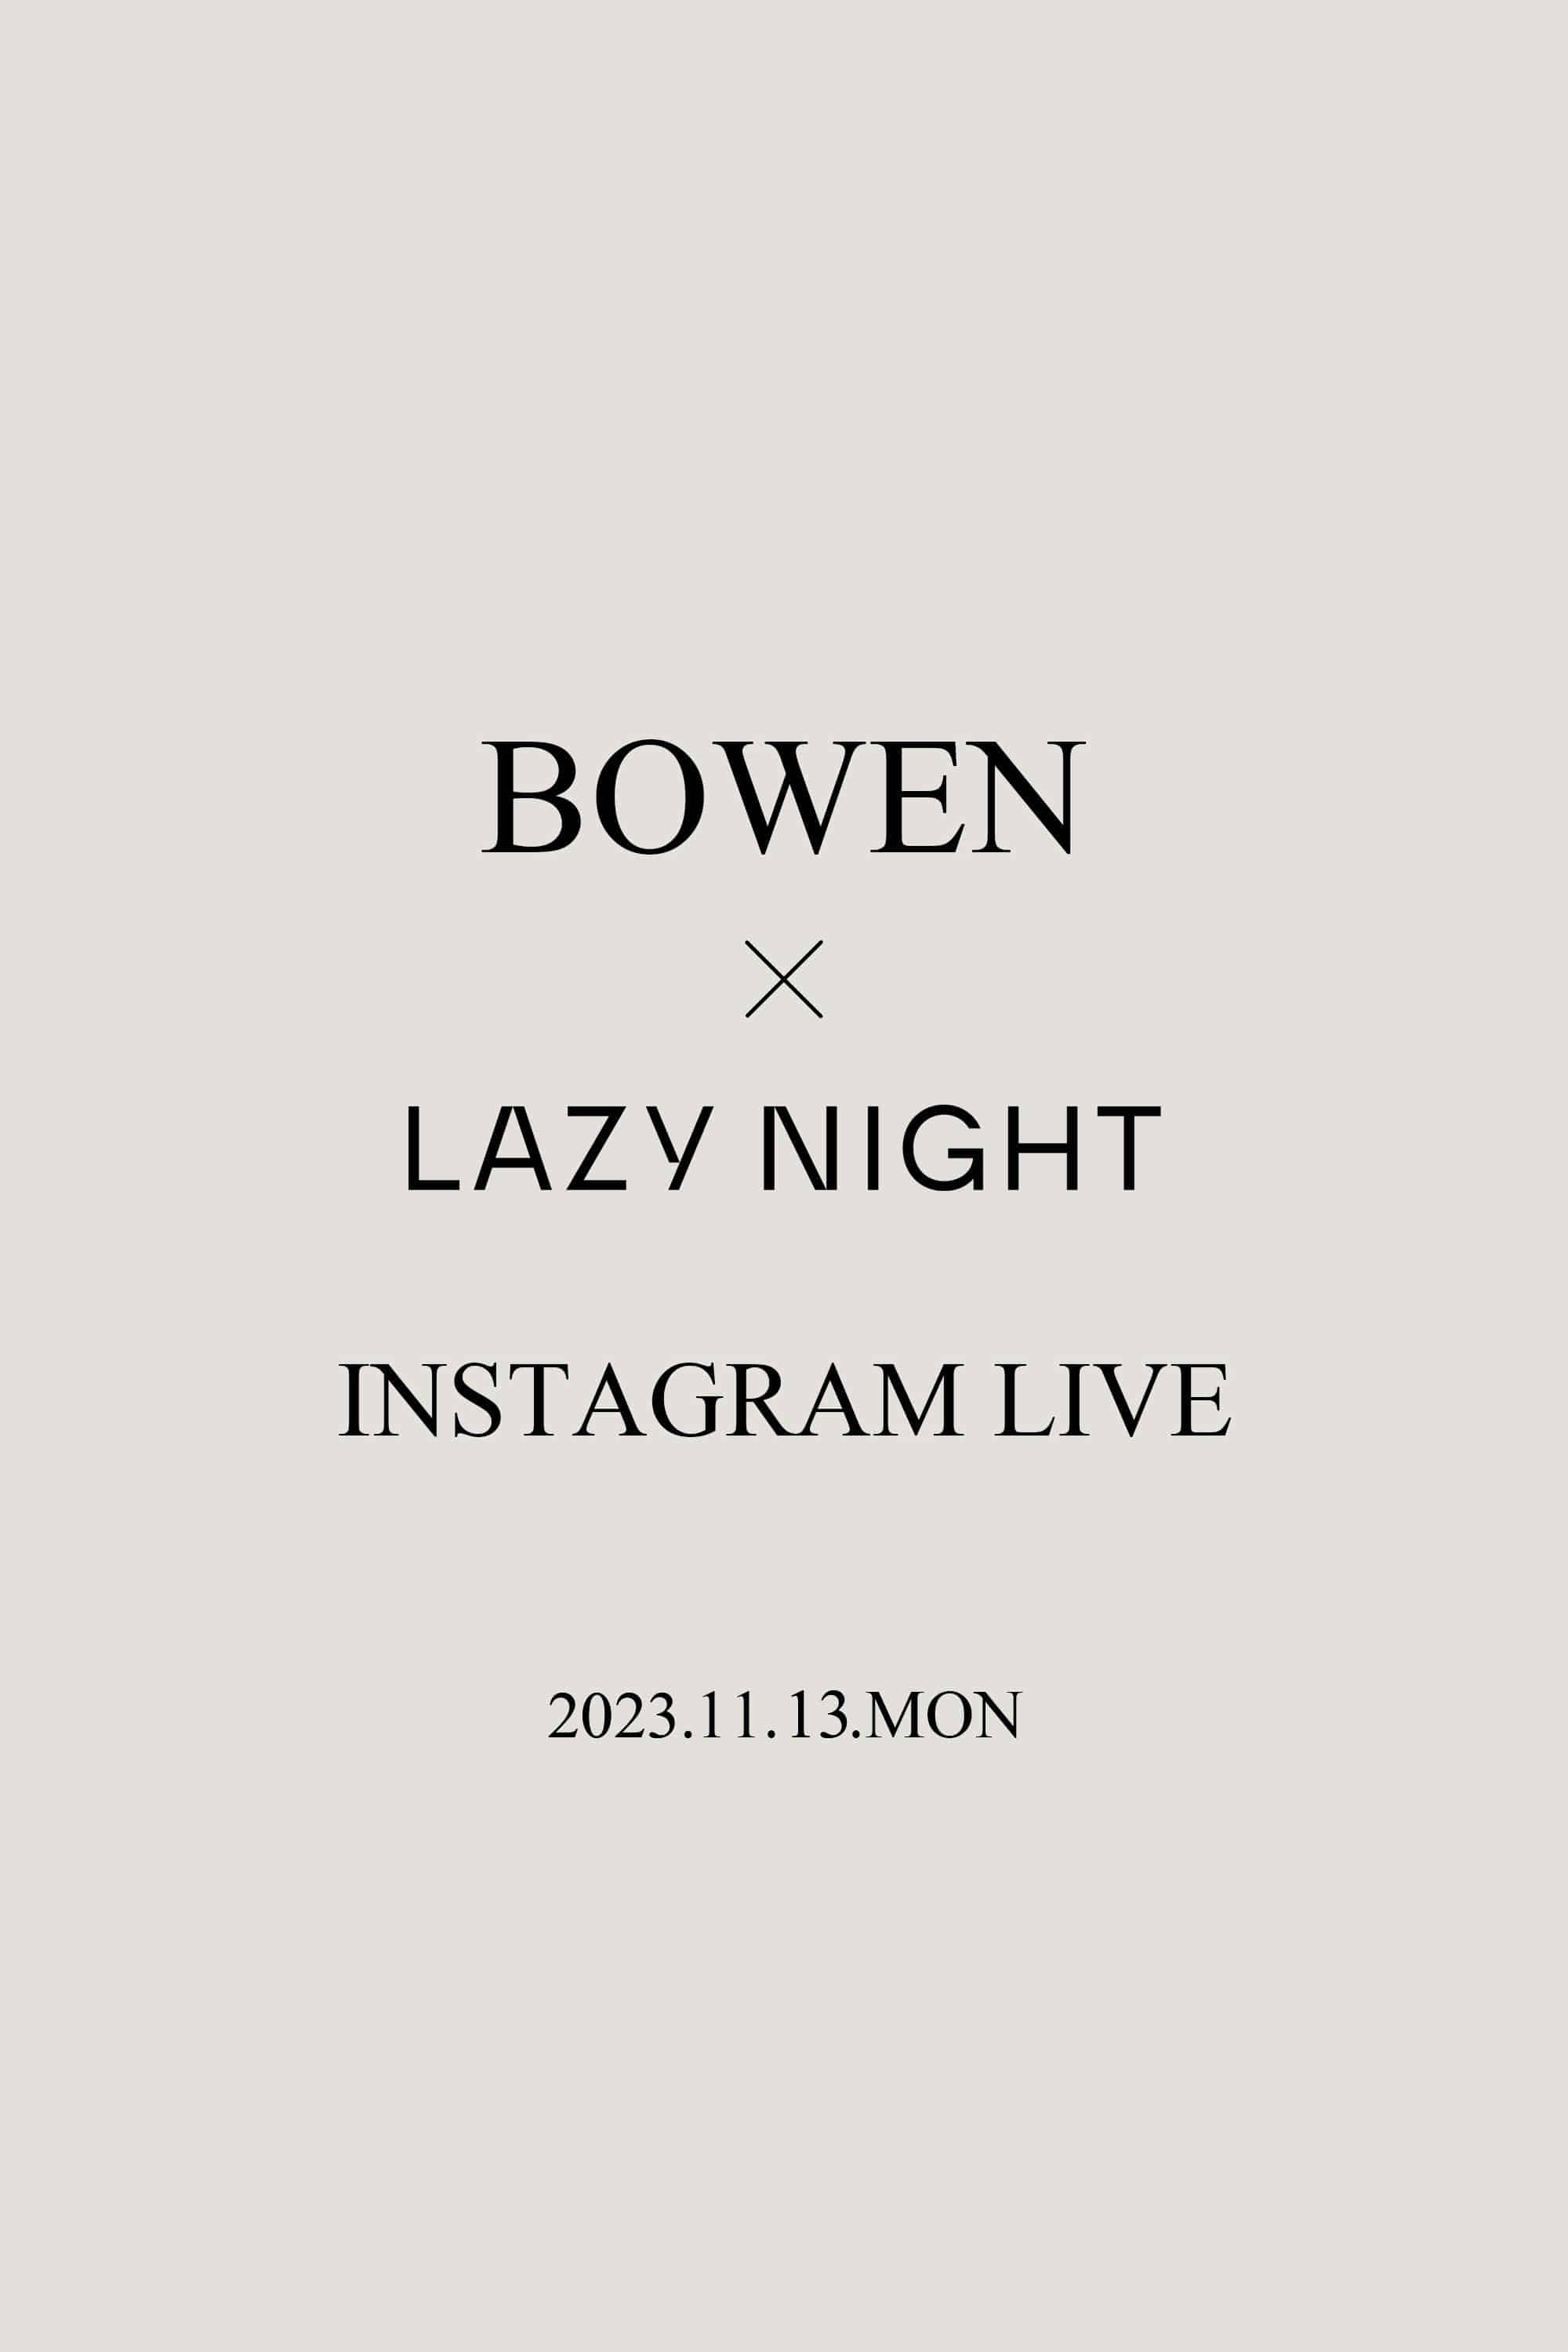 BOWEN X LAZYNIGHT INSTAGRAM LIVE VOD 2023.11.13 MON